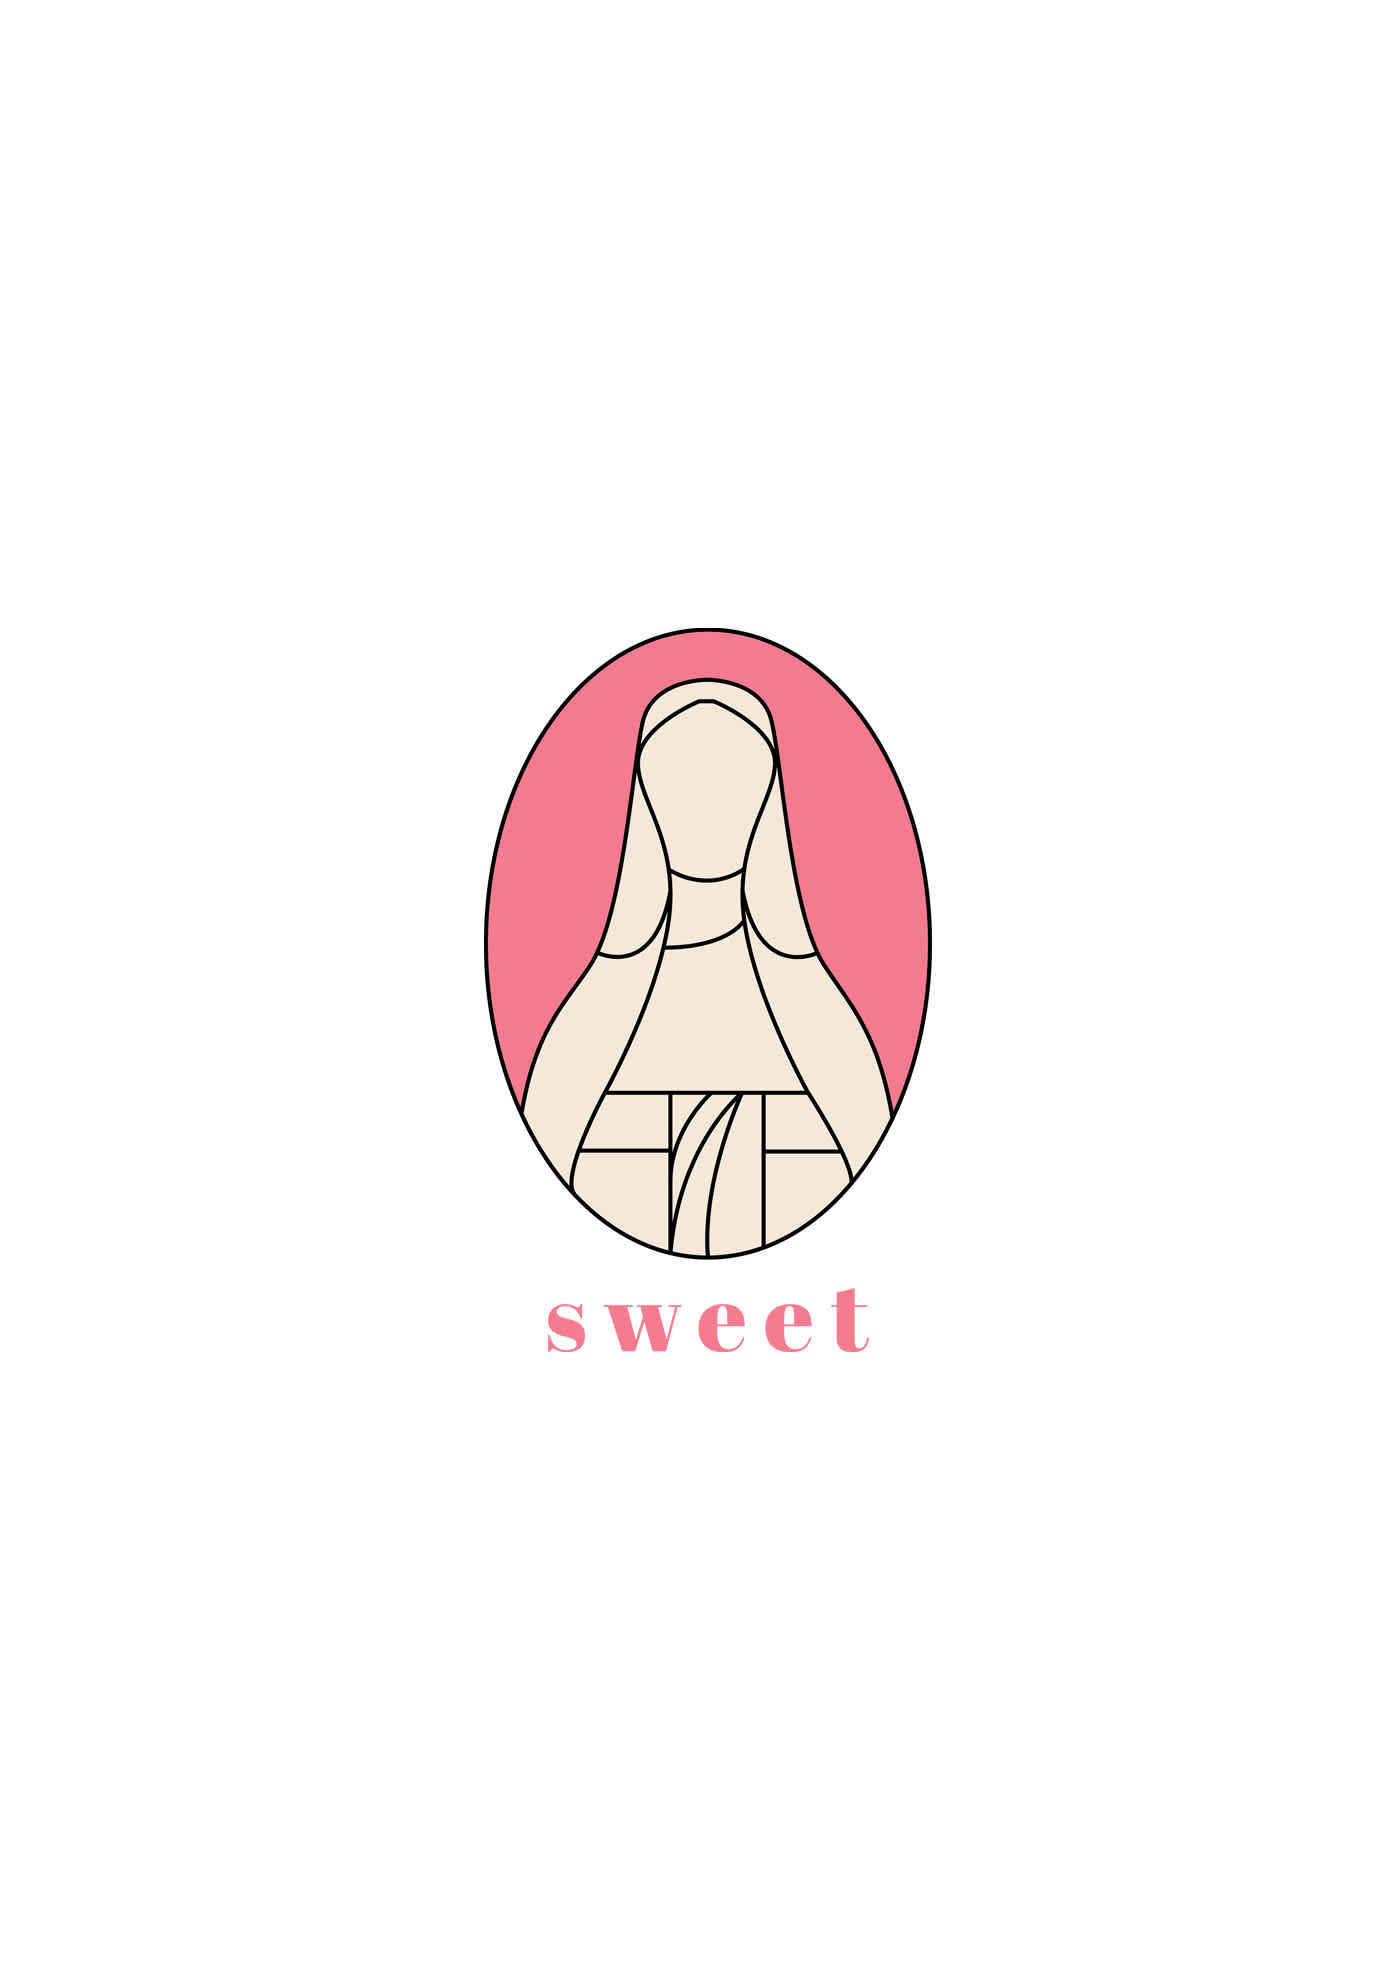 ⒸStudioKATHAN_Sweet-02.jpg